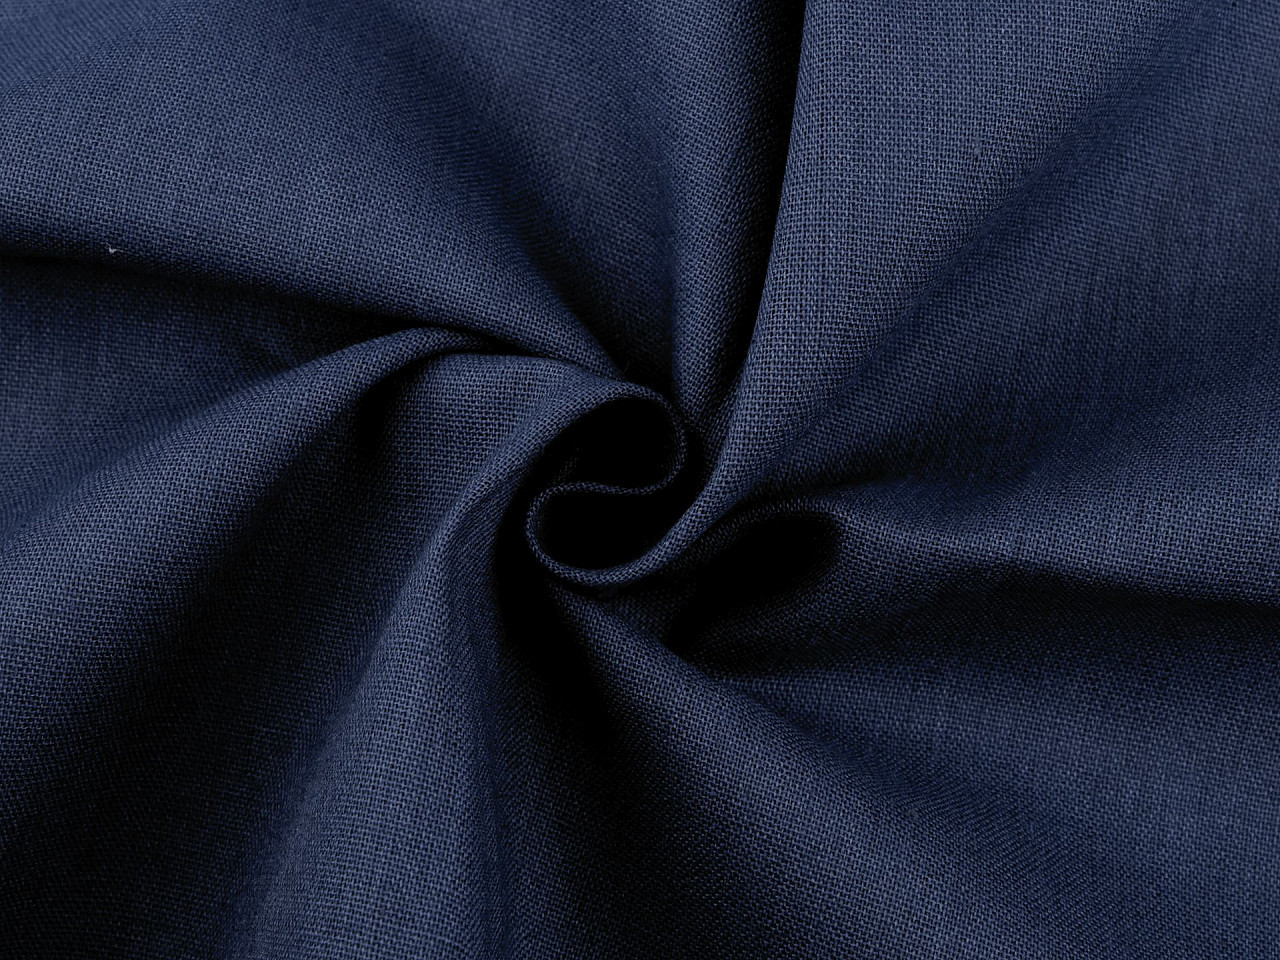 Lněná látka s viskózou, barva 15 (5) modrá tmavá